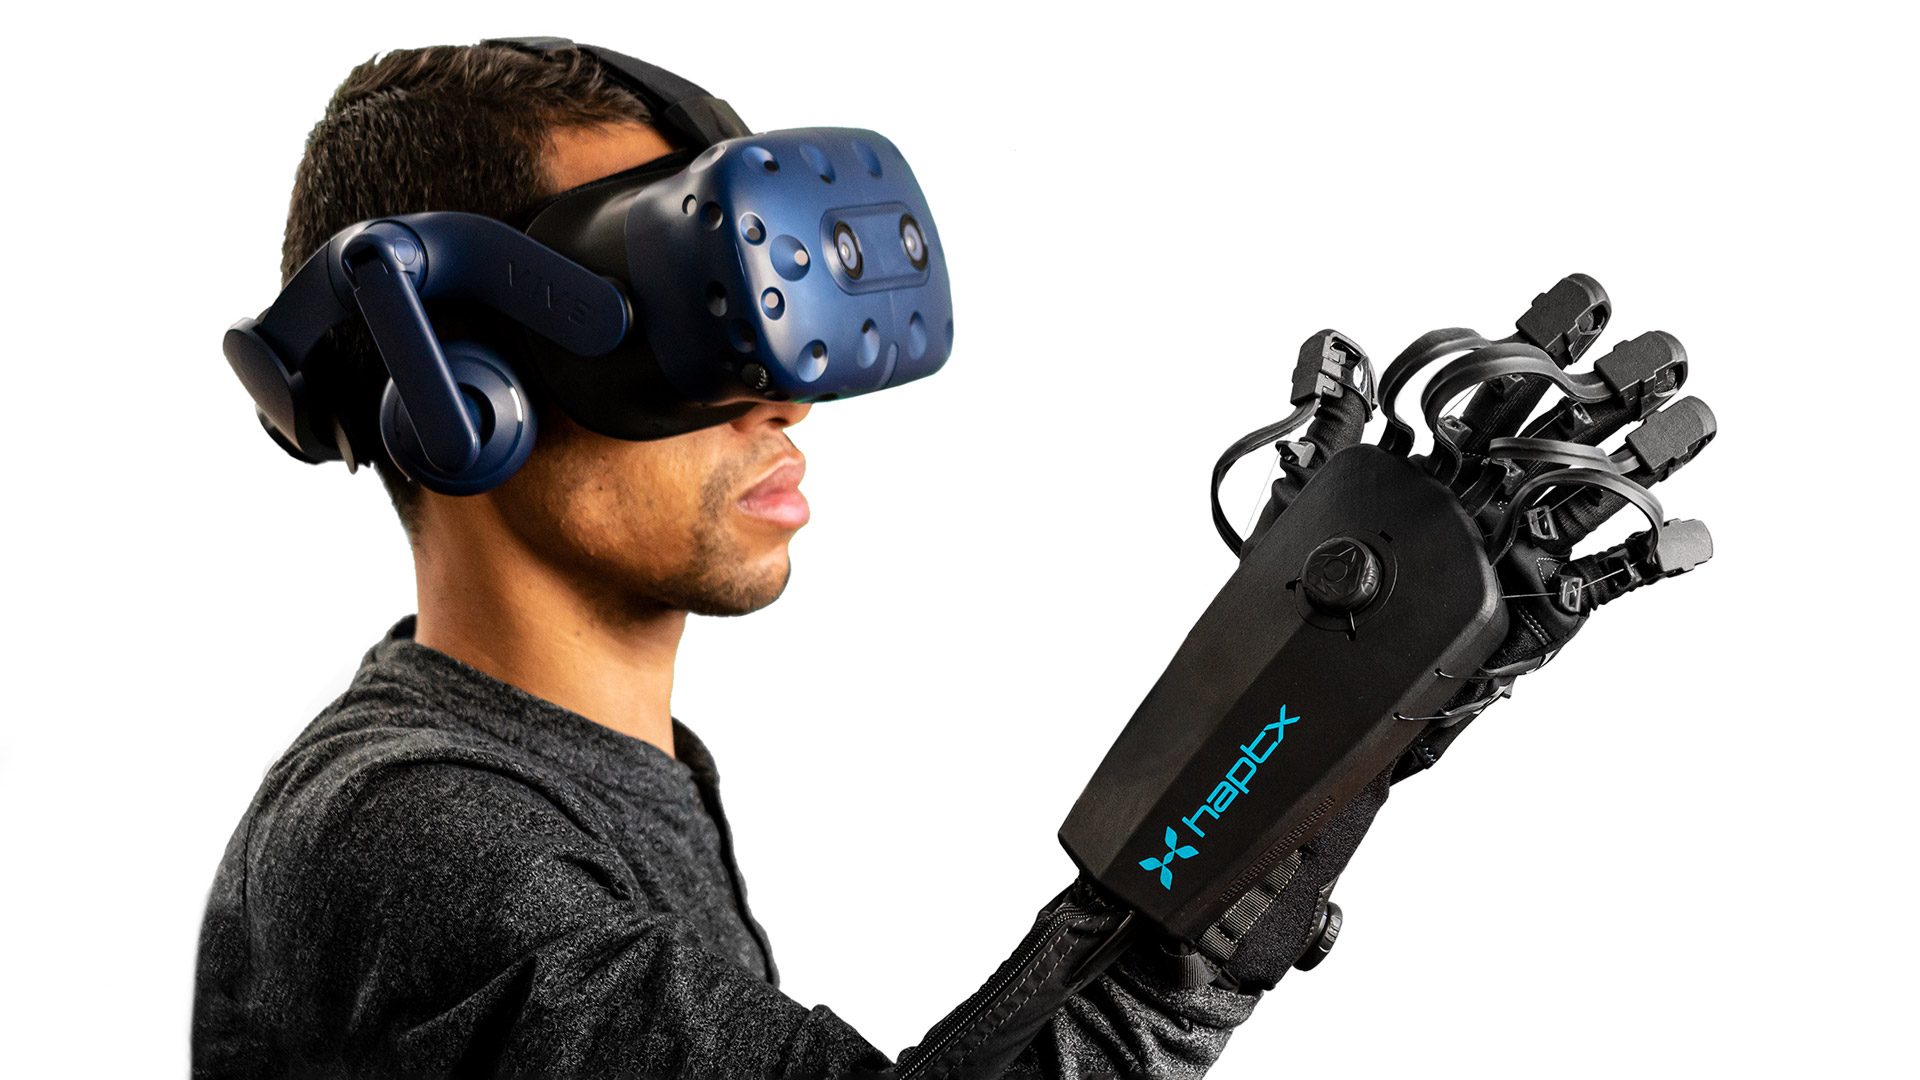 HaptX Launches New & Improved DK2 Haptic VR Gloves for Enterprise